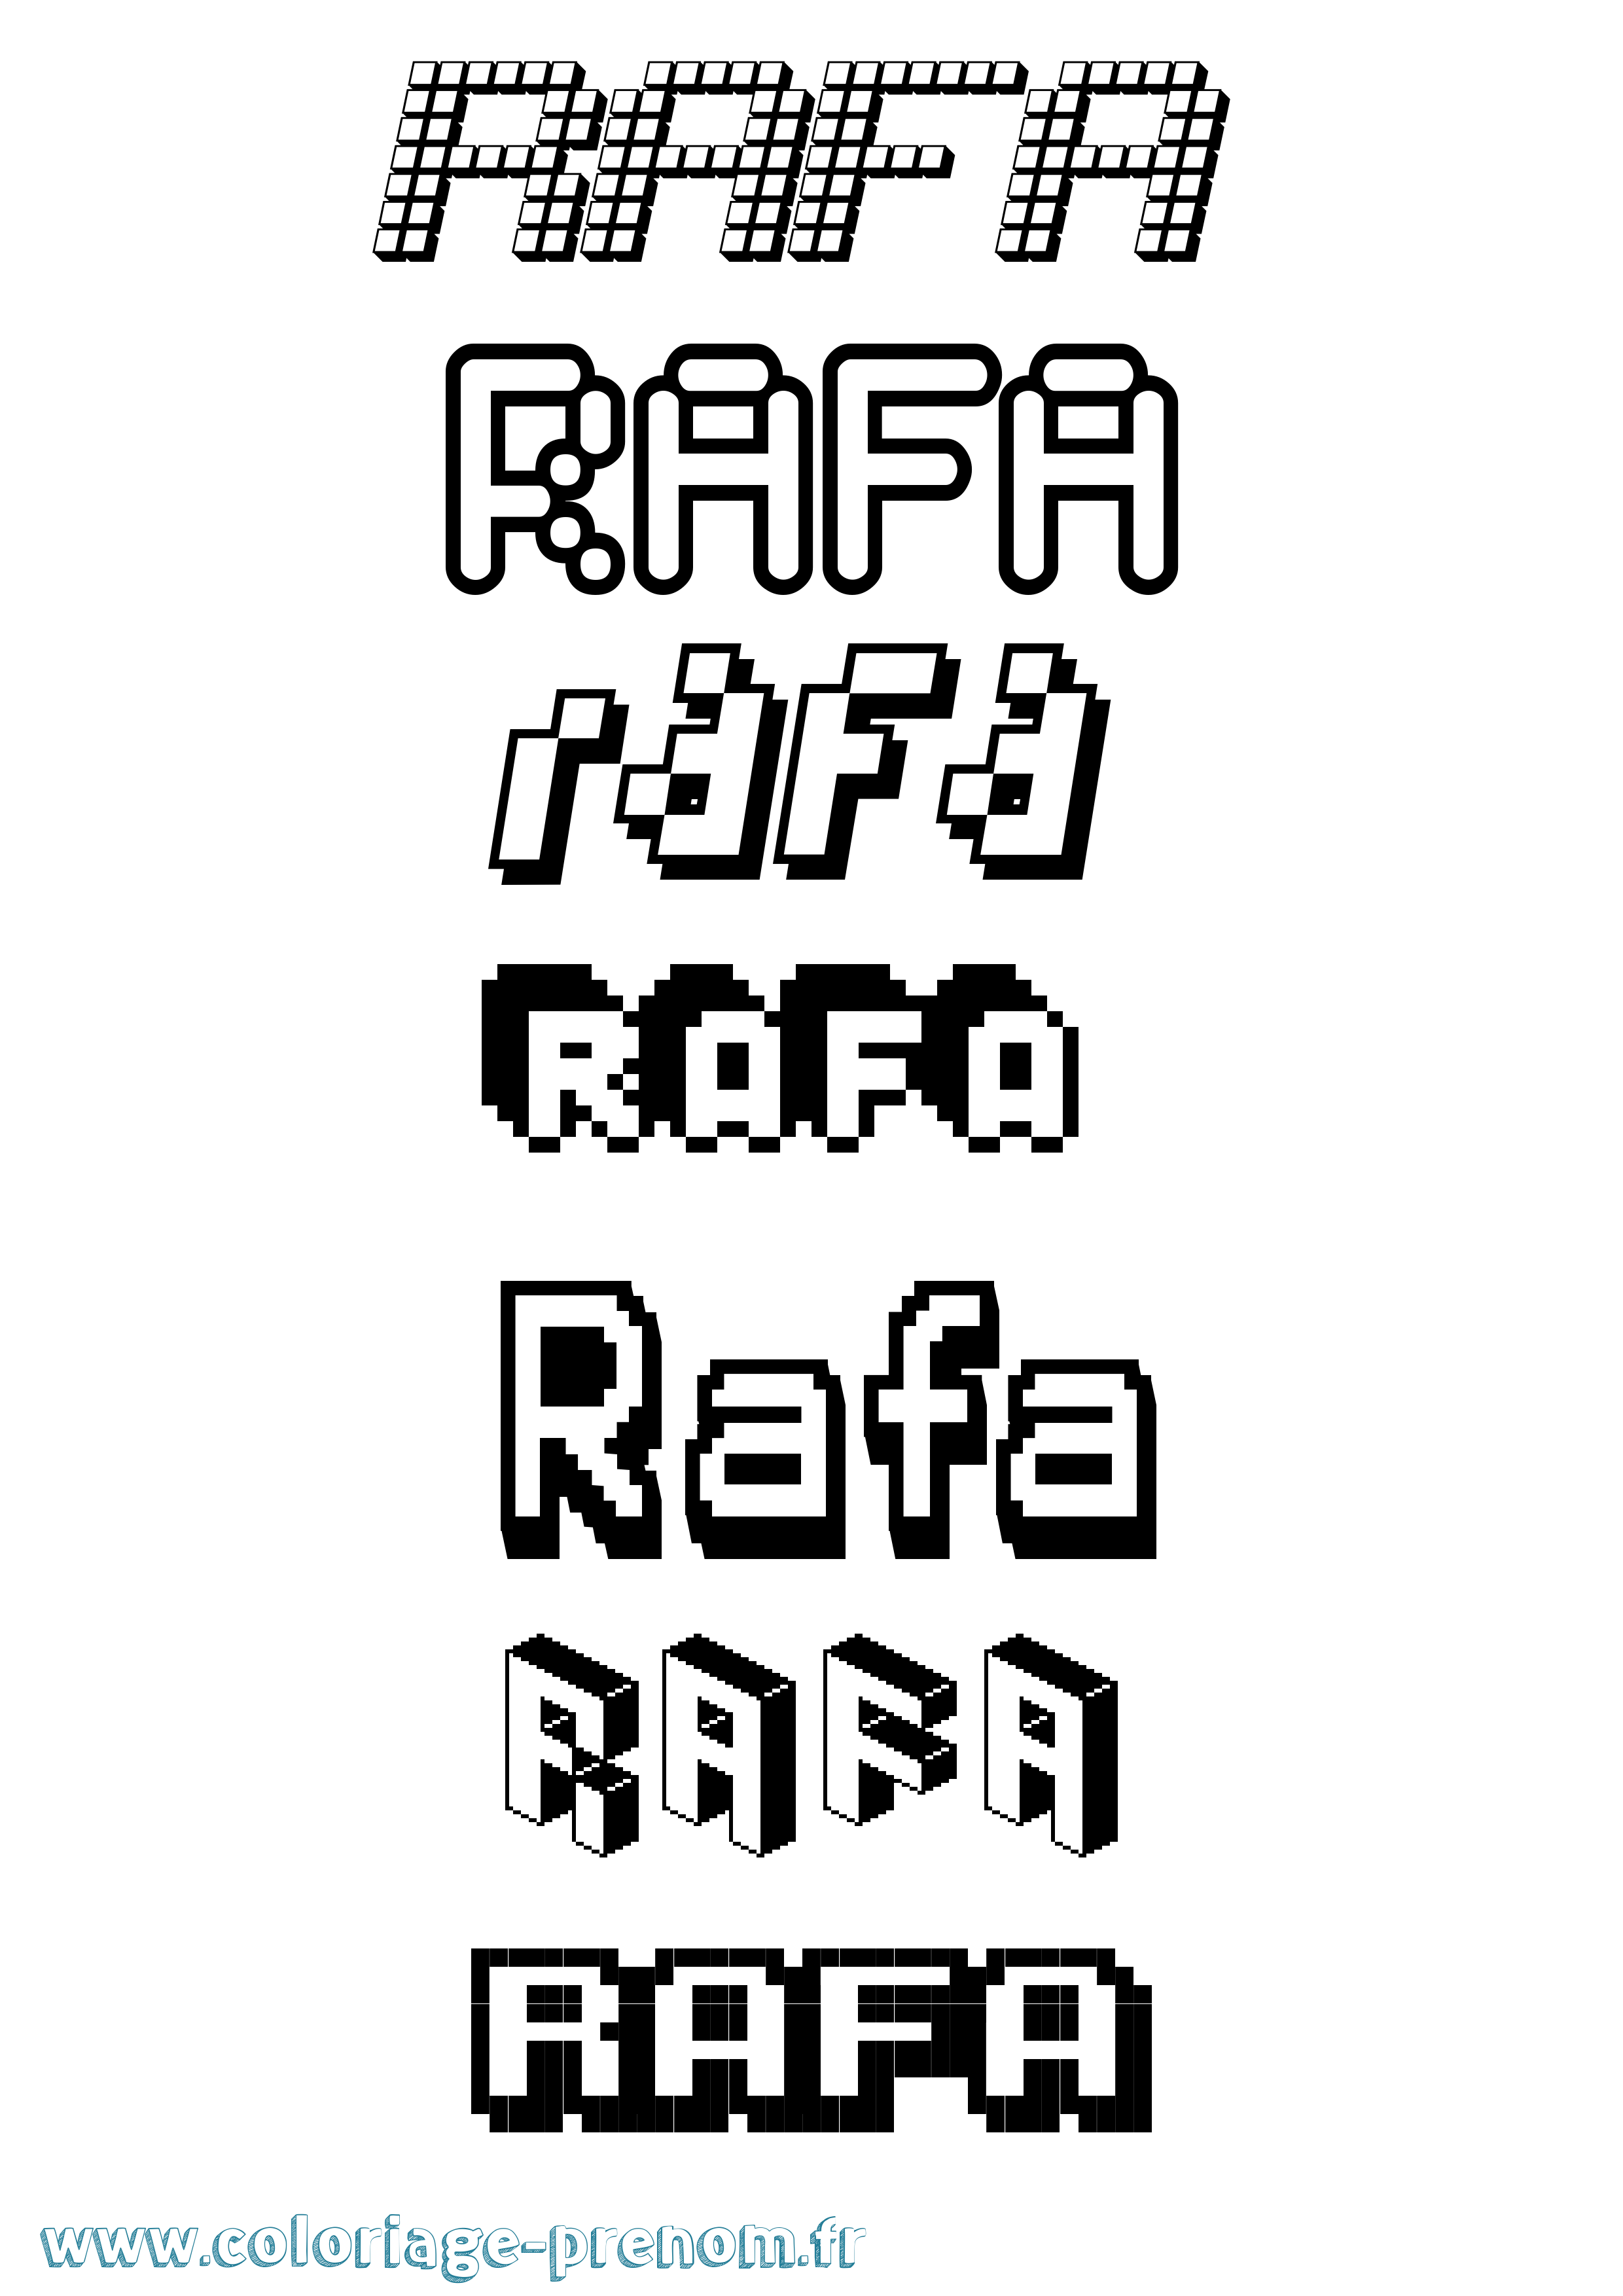 Coloriage prénom Rafa Pixel